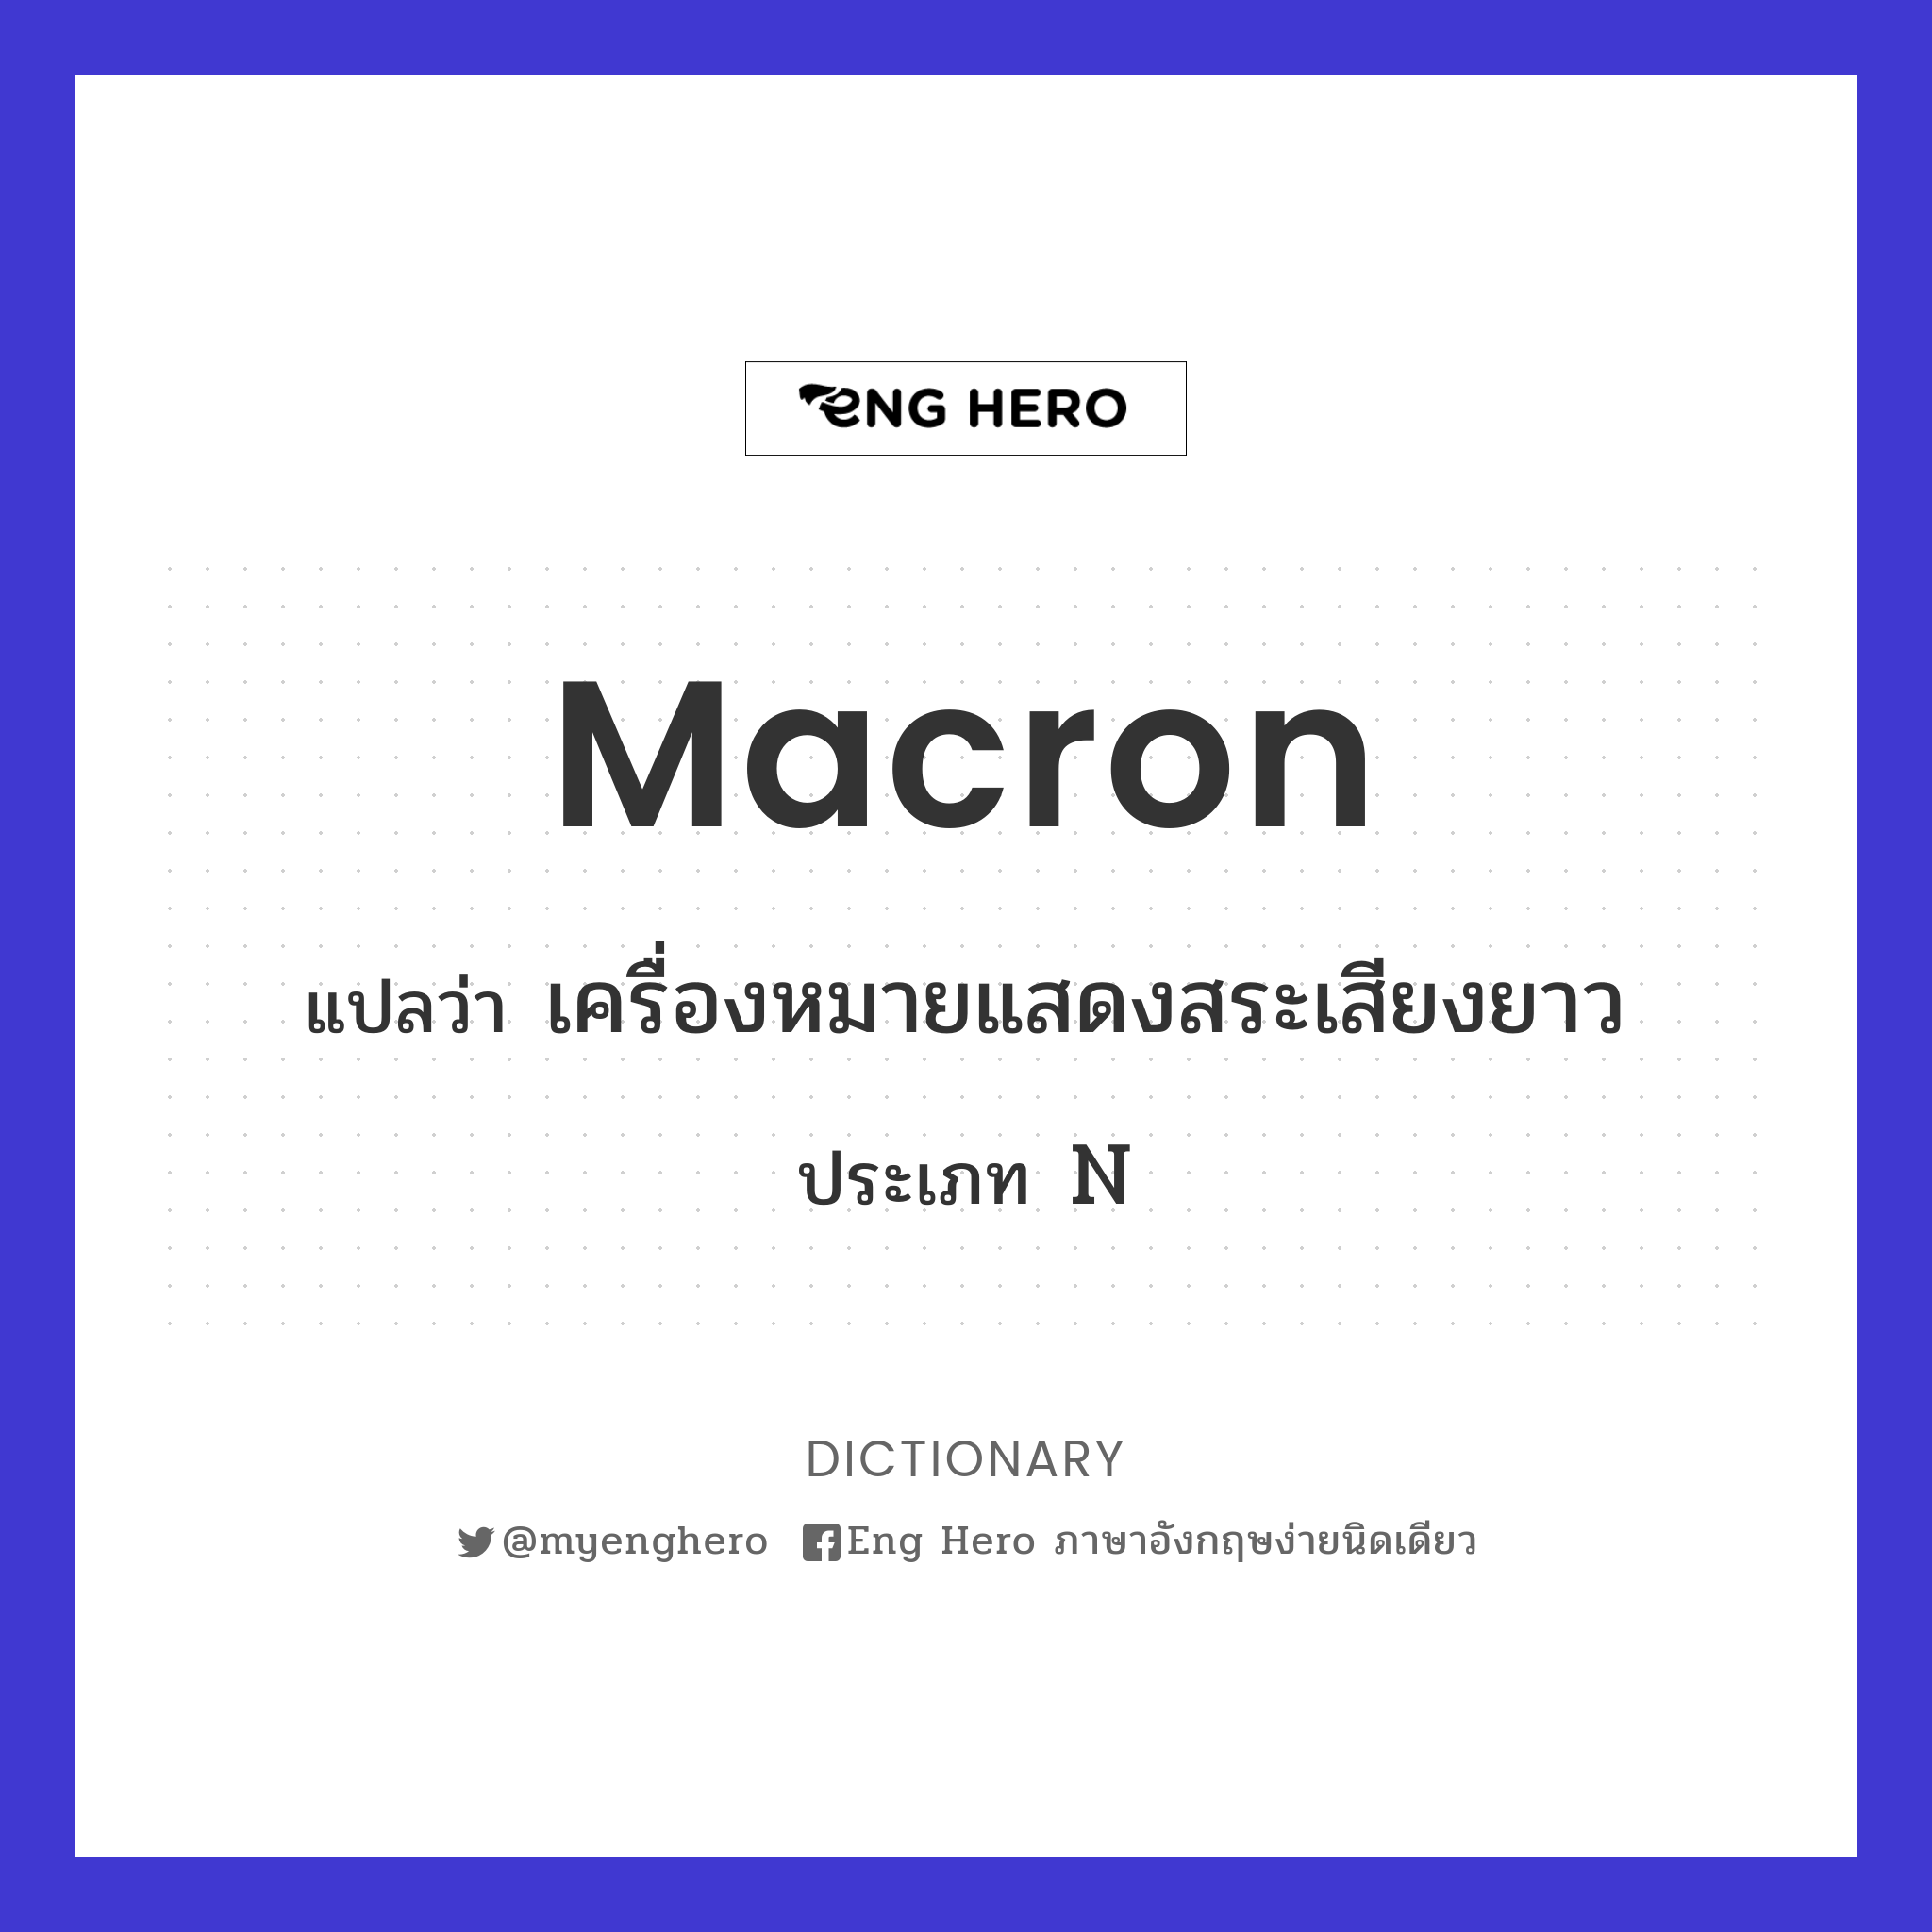 macron